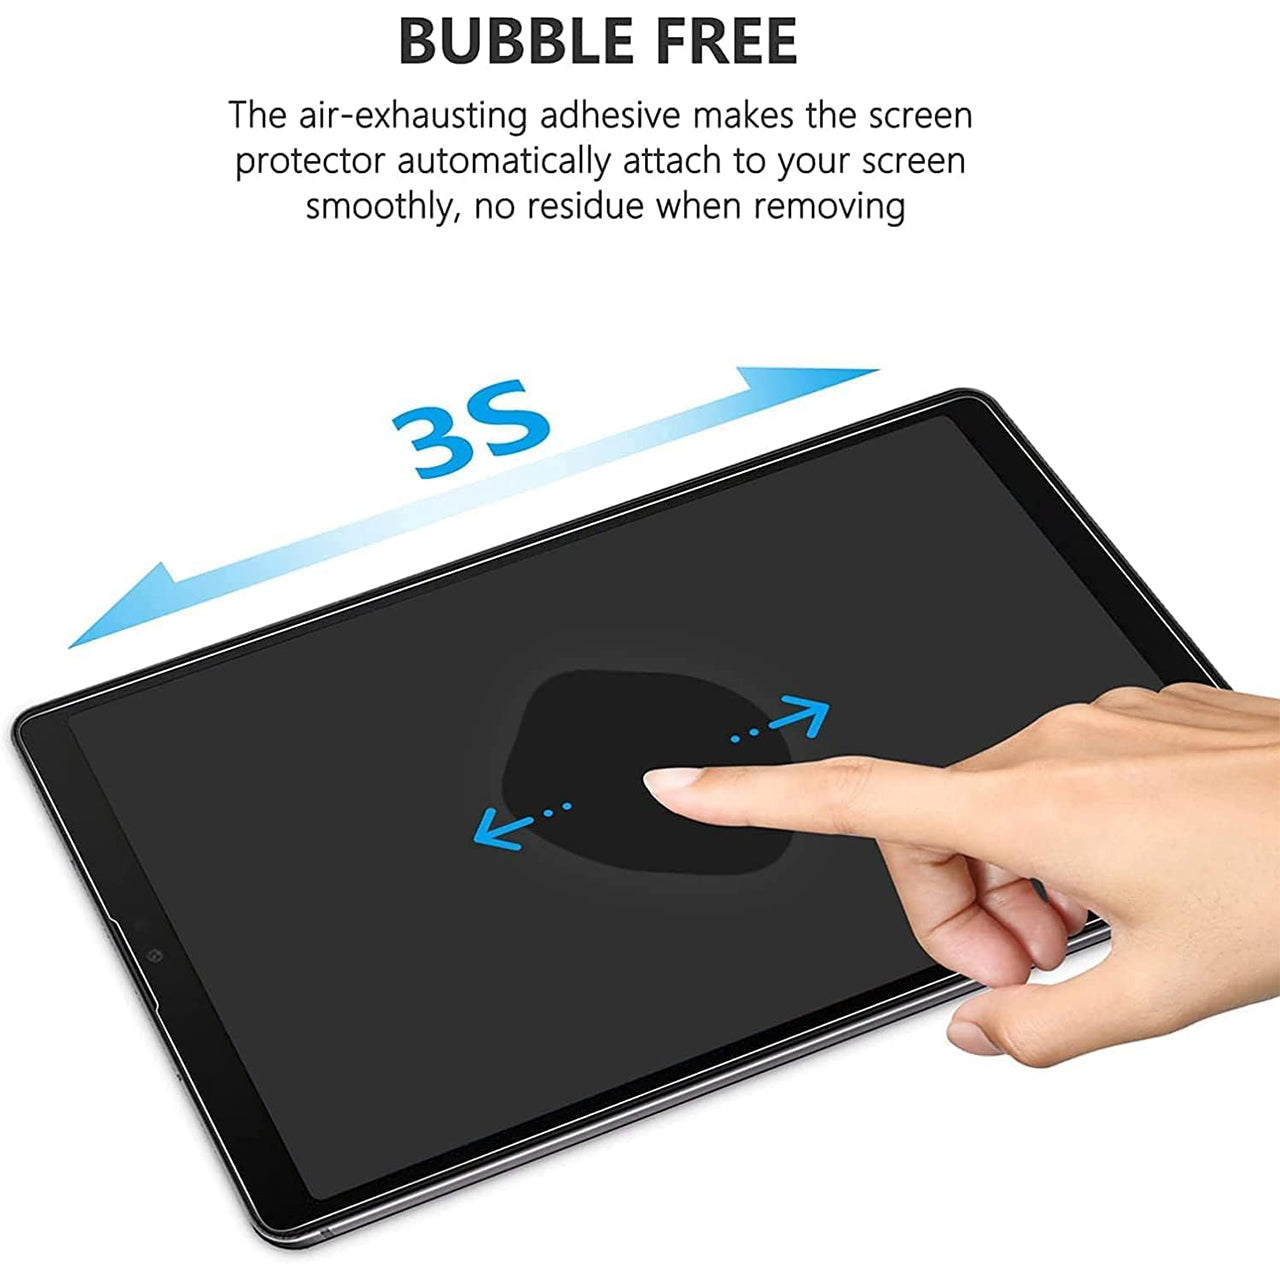 SPARIN  Protector Samsung Galaxy Tab A 8.4 Pulgadas 2020 Tablet - Protector de Pantalla de Vidrio Templado (Sin Burbujas, Dureza 9H) - SPARIN Protector Samsung Galaxy Tab A 8.4 Inch 2020 Tablet - Tempered Glass Screen Protector (Bubble Free, 9H Hardness)